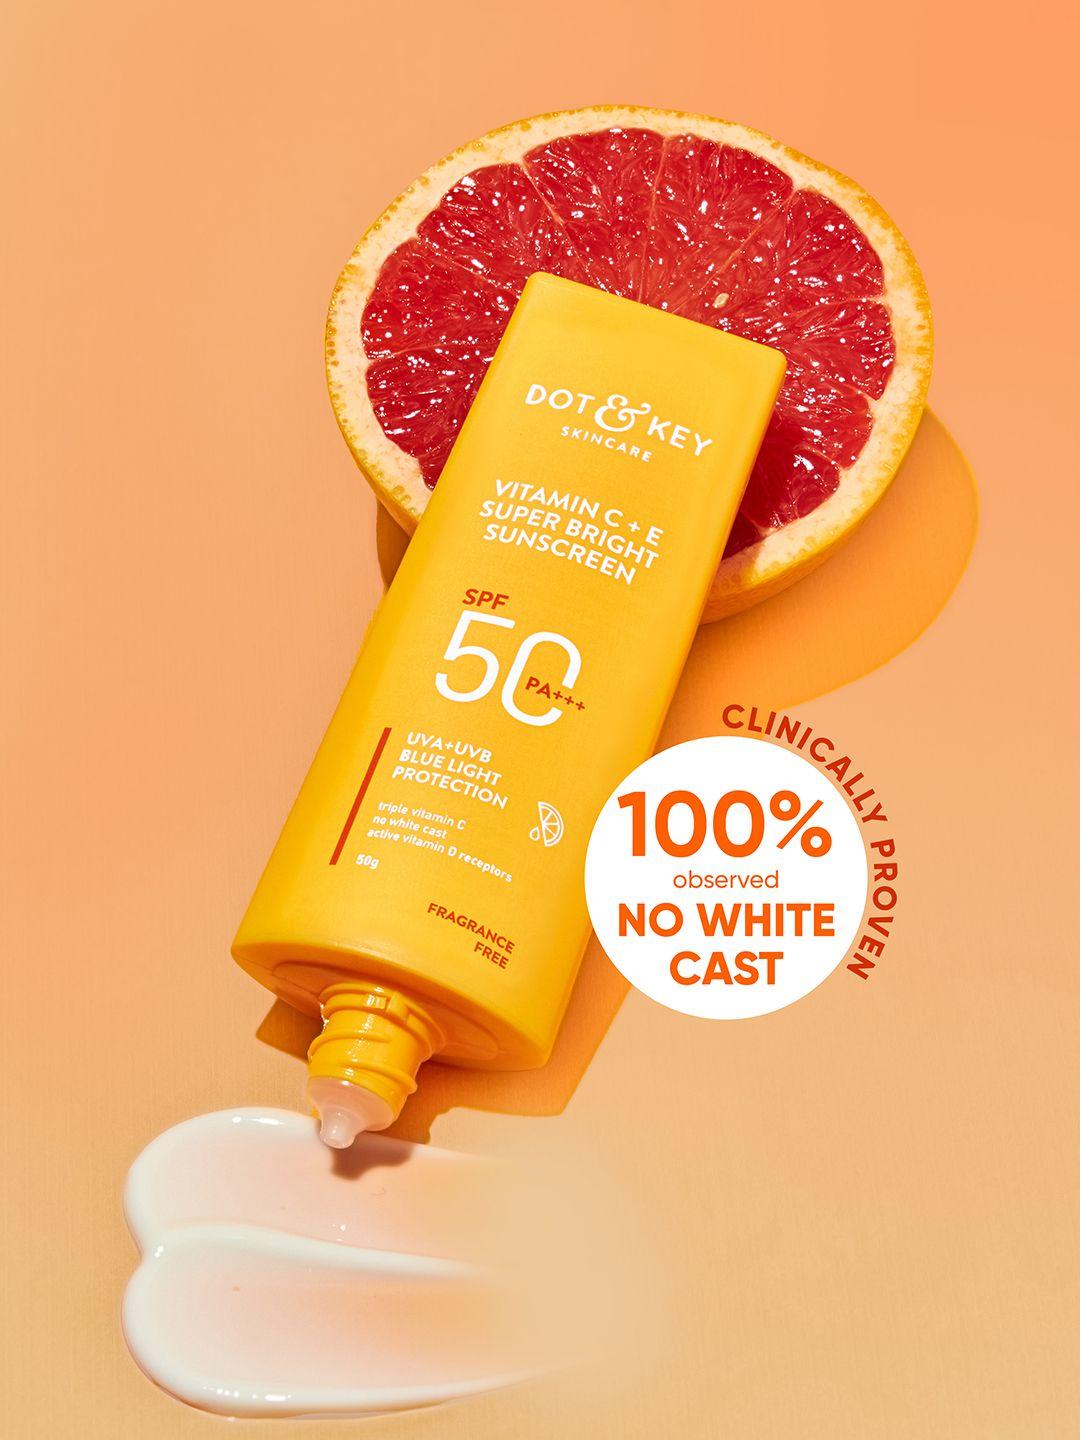 dot-&-key-vitamin-c-+-e-sunscreen-spf-50-pa+++-for-glowing-skin,-100%-no-white-cast---50g